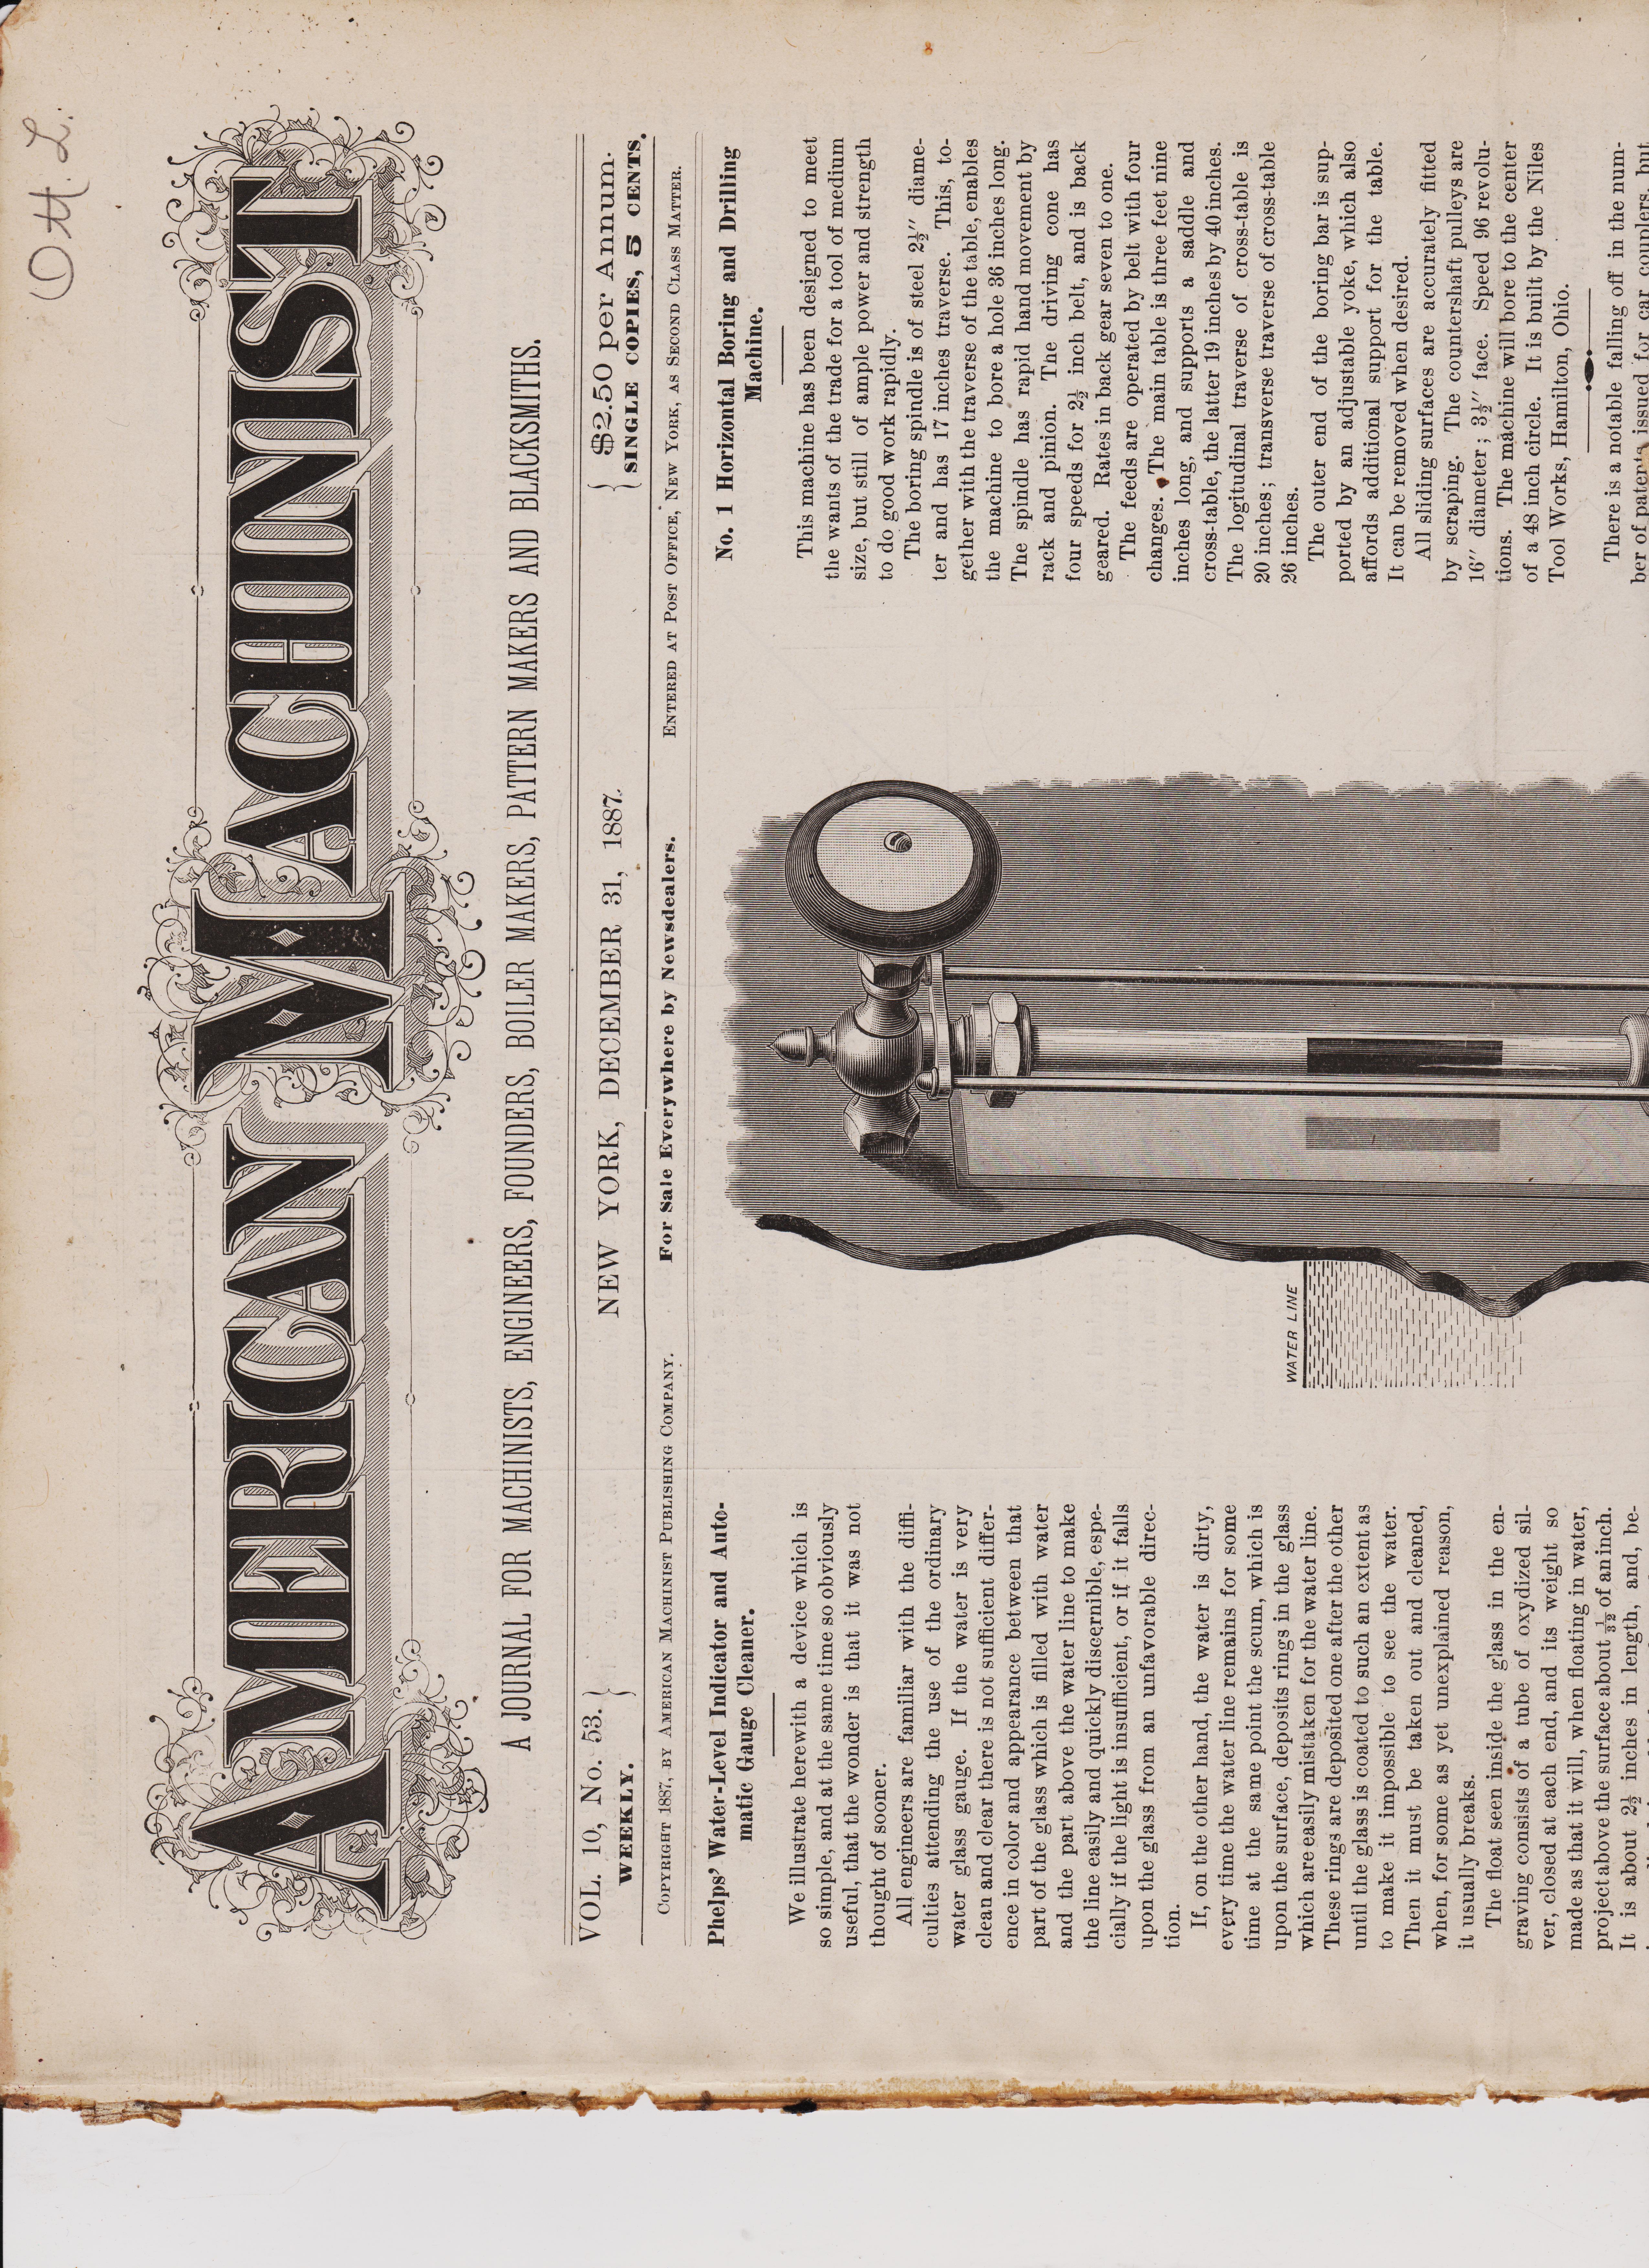 https://antiquemachinery.com/images-2021/American-Machinist-1887-Dec-31-pg-1-top.jpeg